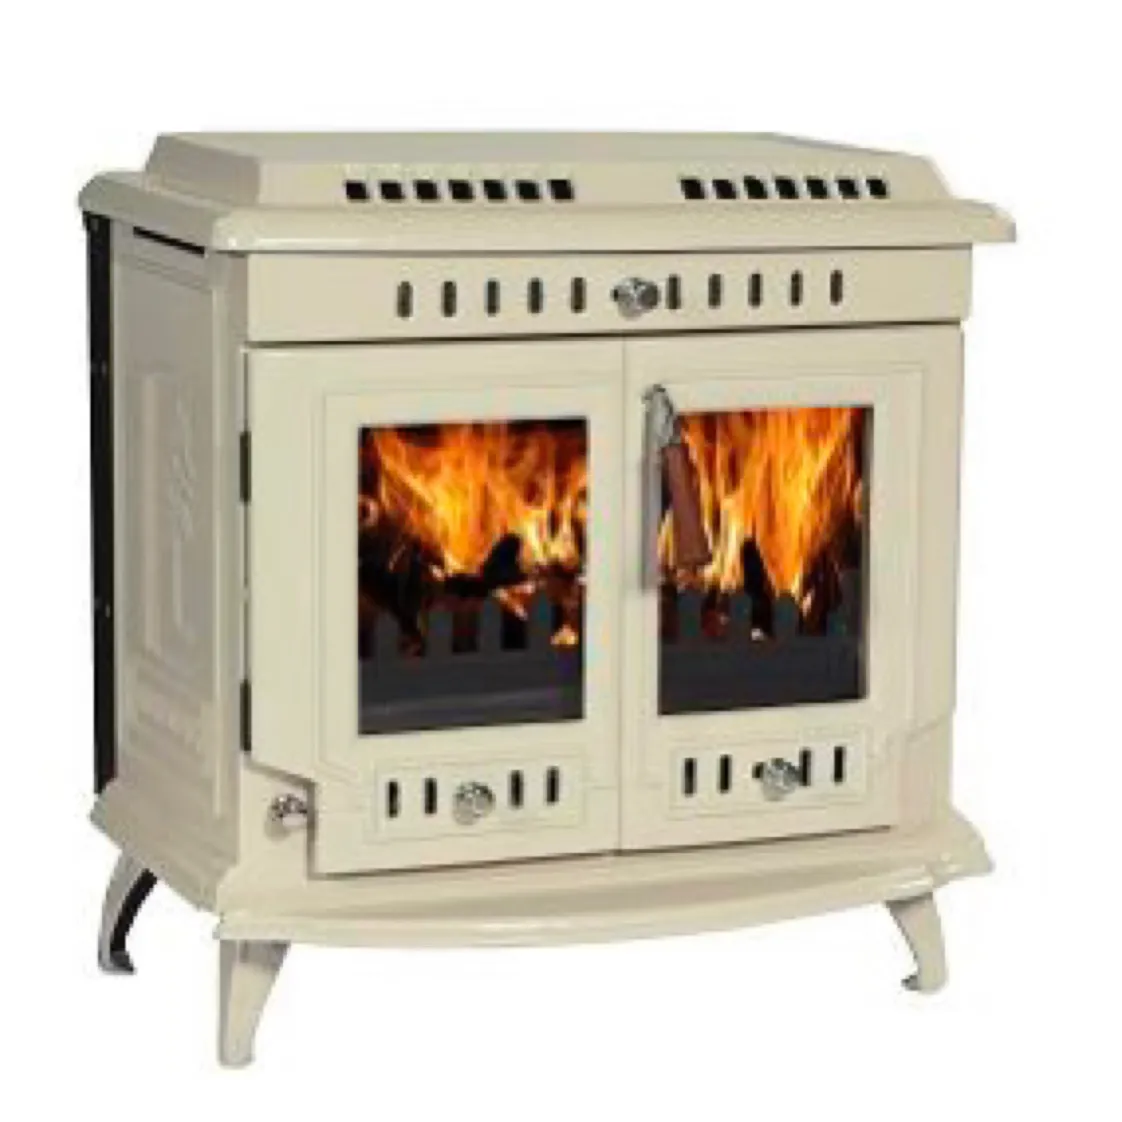 double door High capacity cast iron wood burning stove wood fireplace wood stove burner indoor